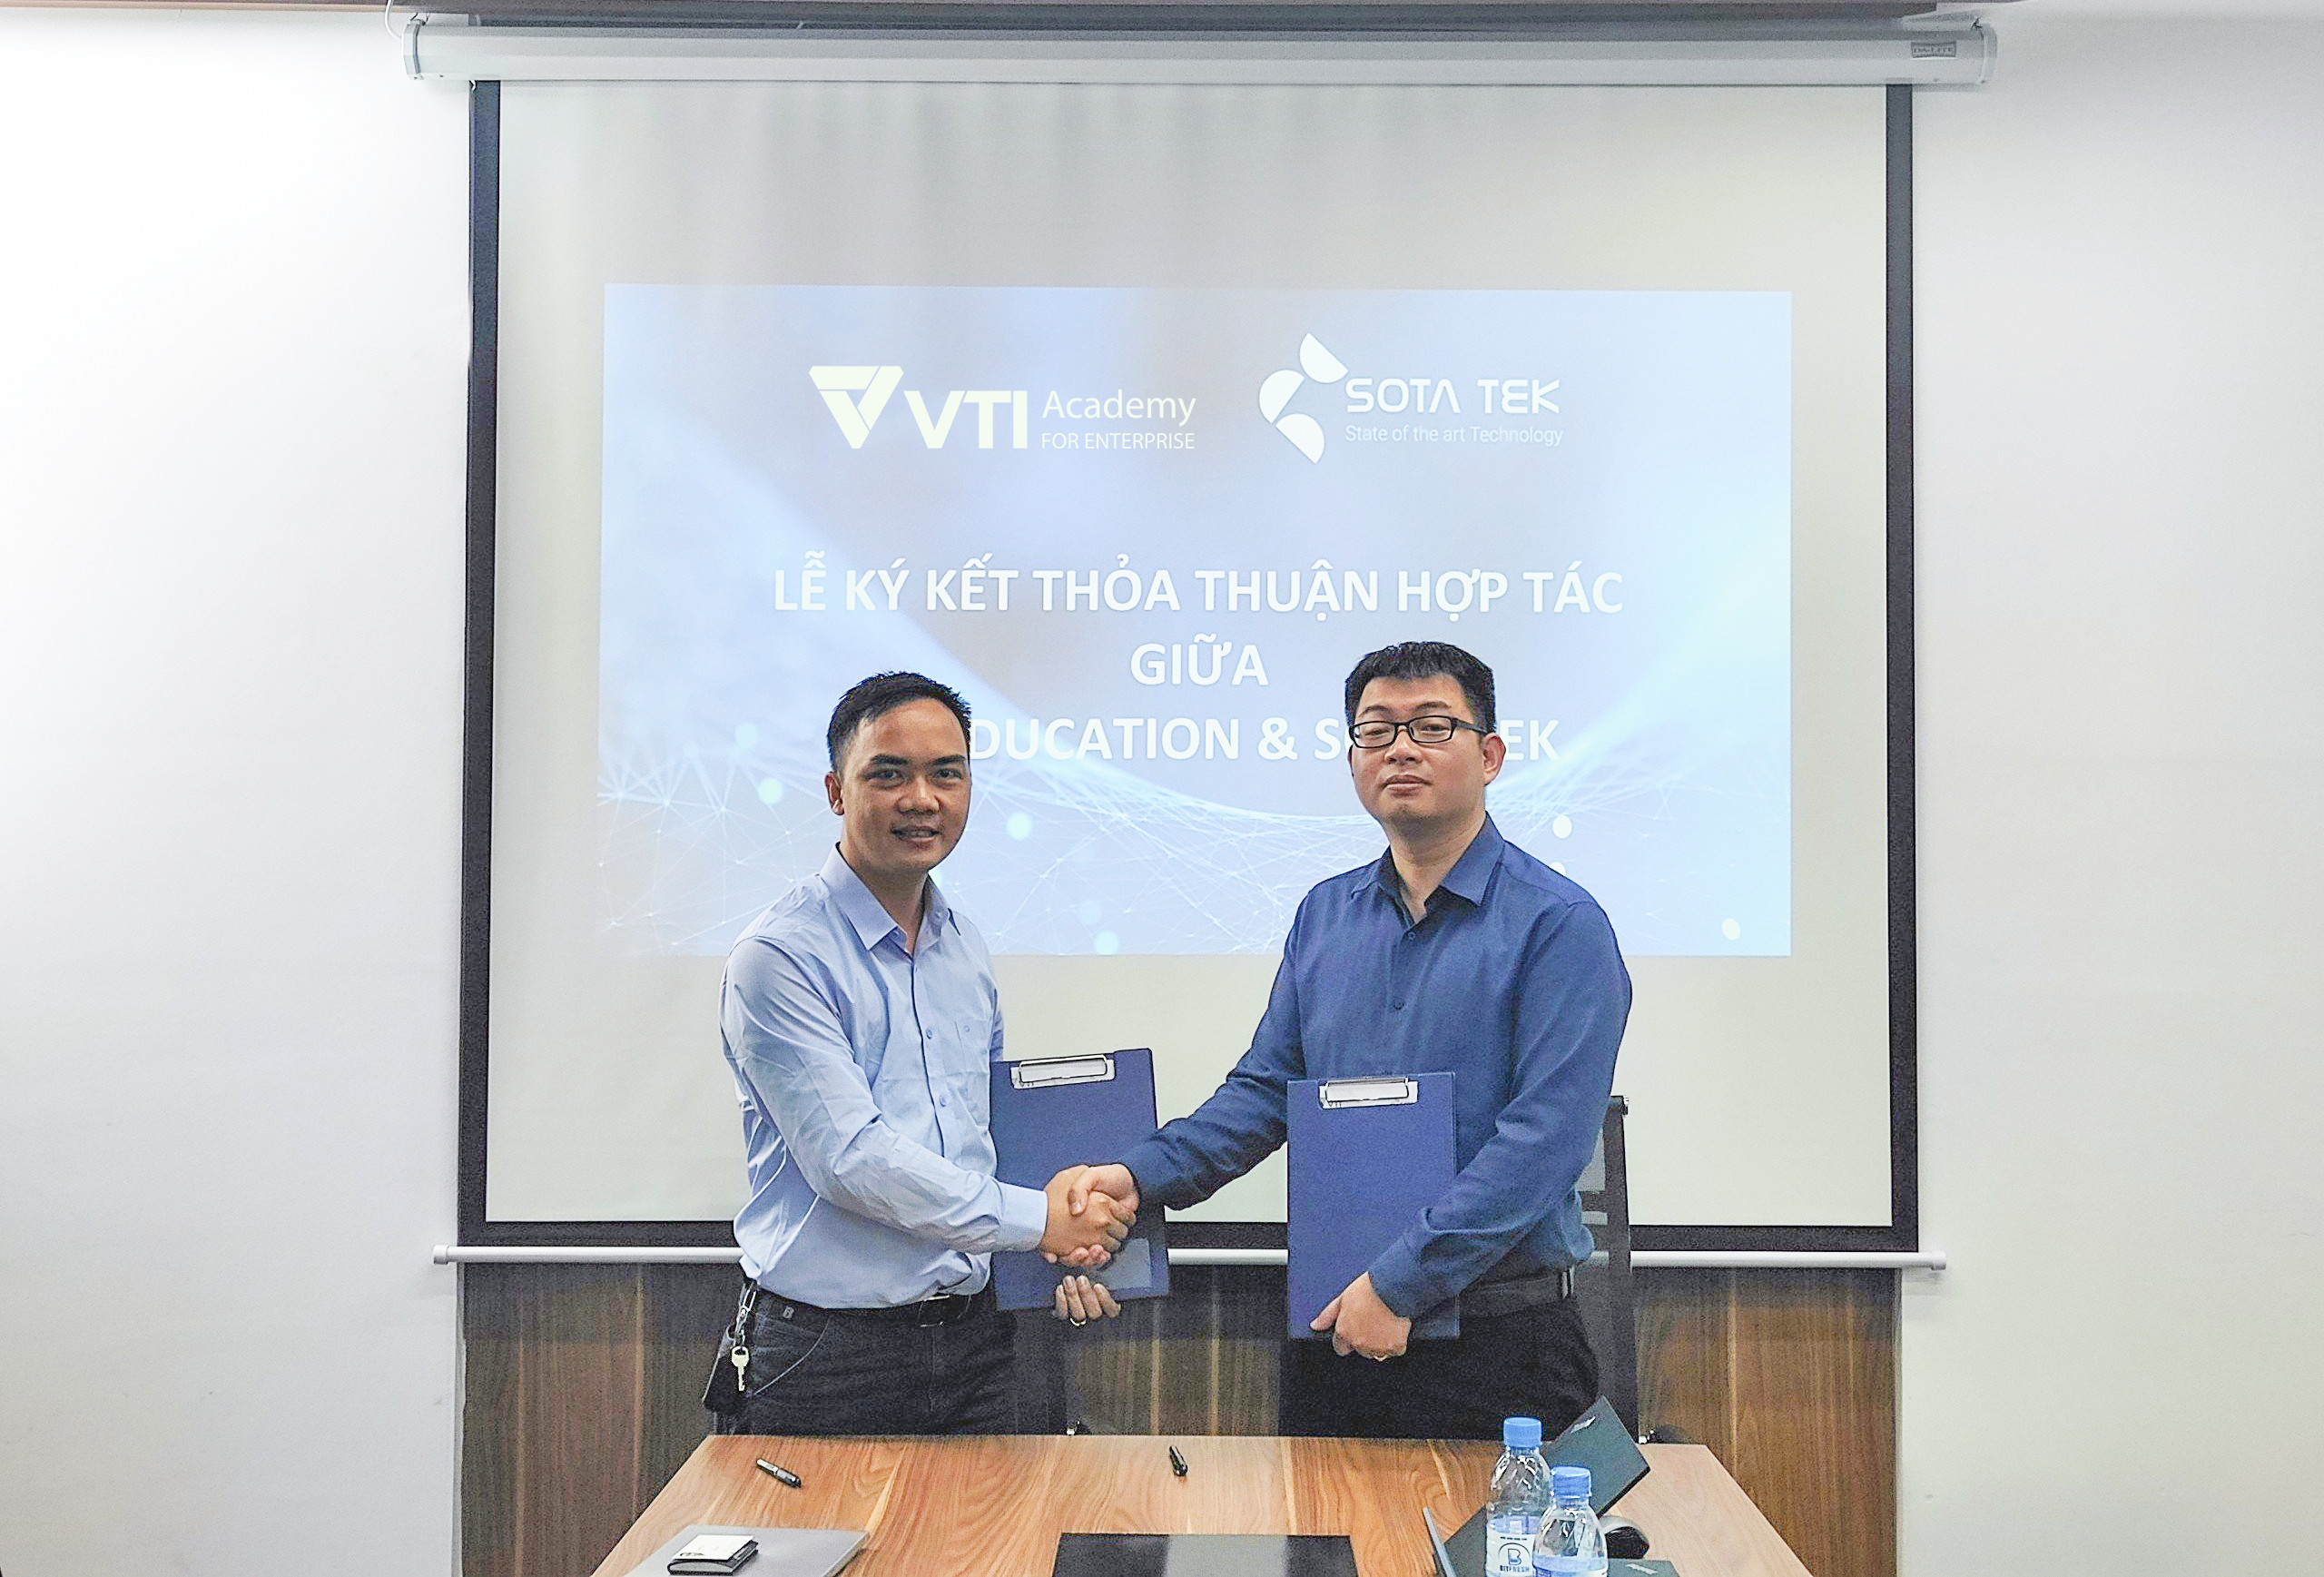 VTI Academy For Enterprise ký thỏa thuận hợp tác với Sota Tek